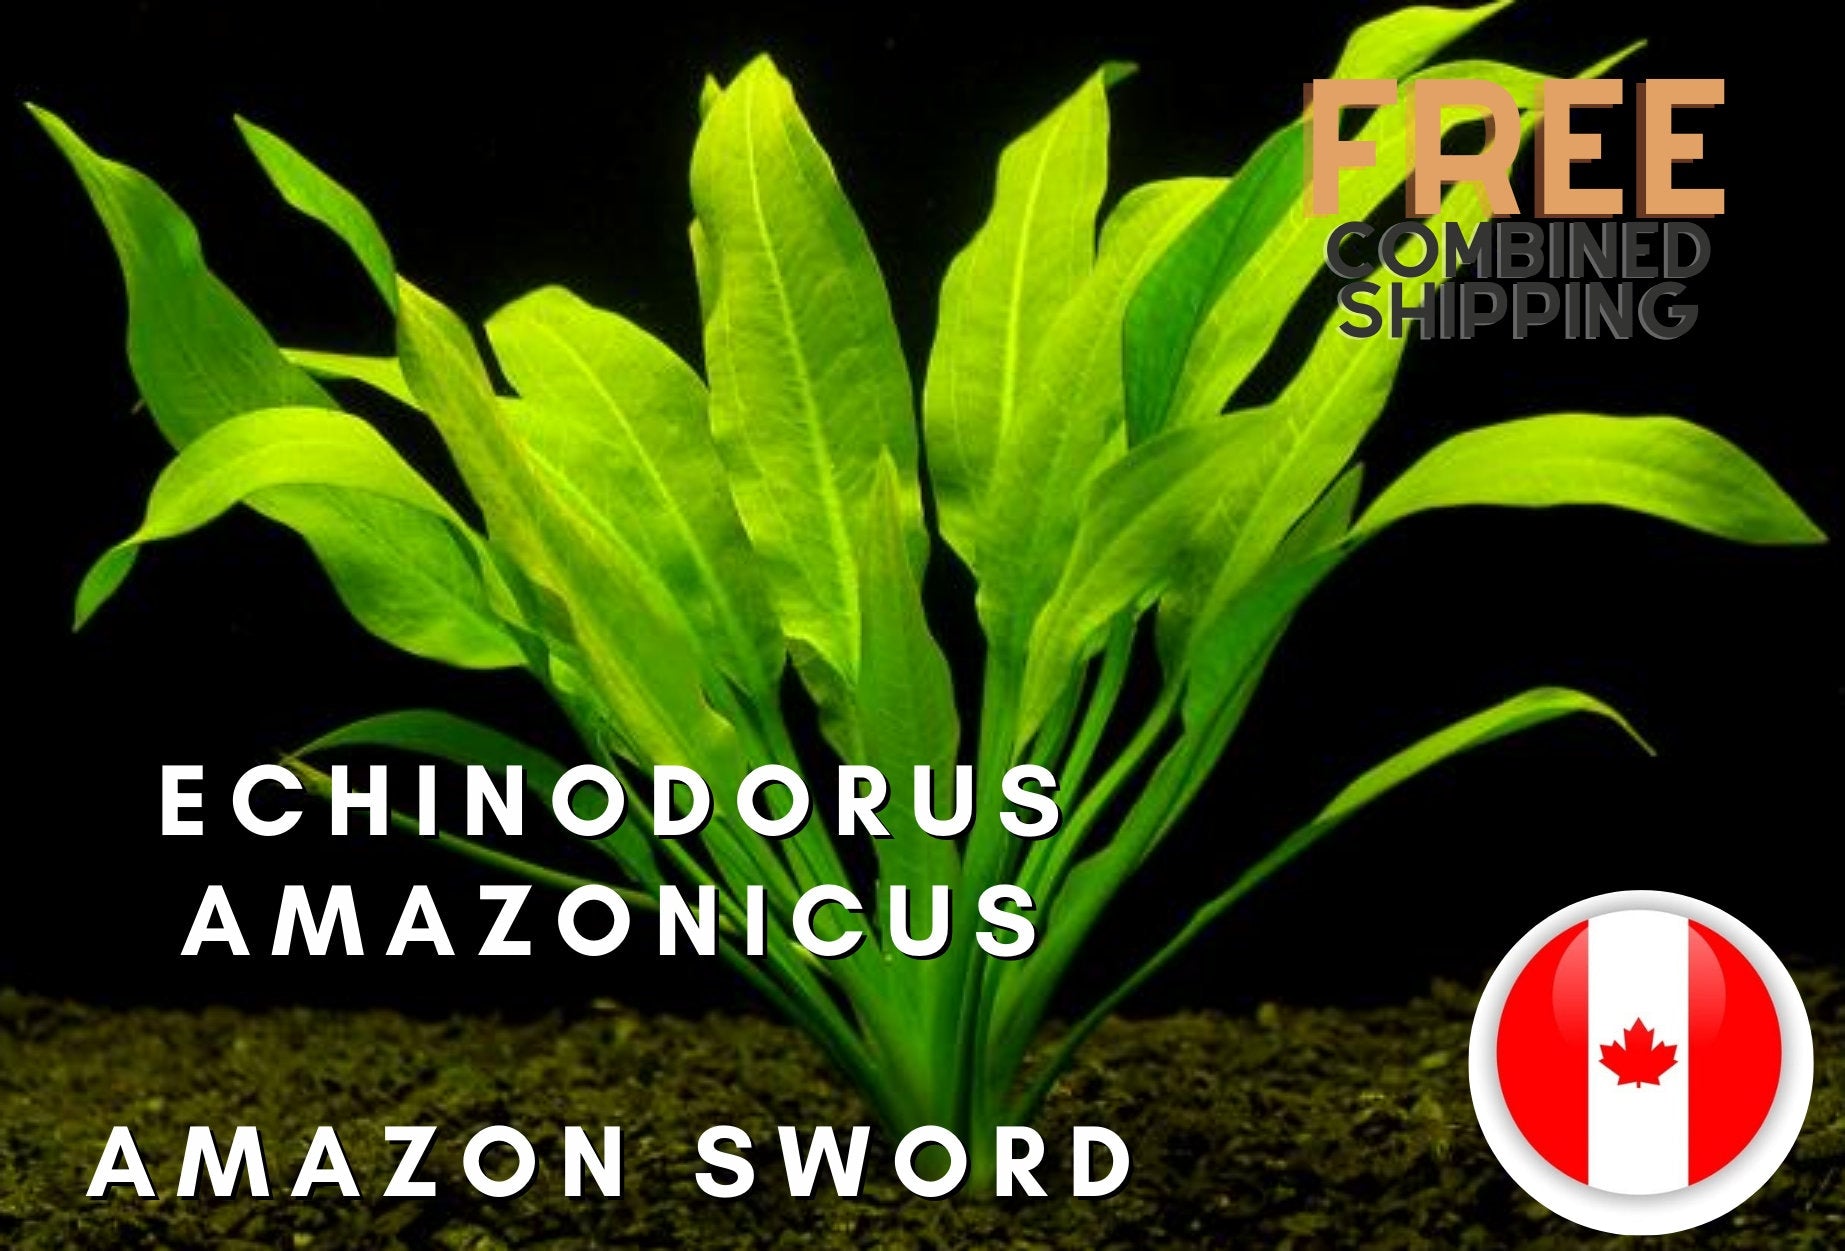 Echinodorus Amazonicus - Amazon sword - Aquarium Plants - Aquatic Plants - Canada Seller - Combined Shipping